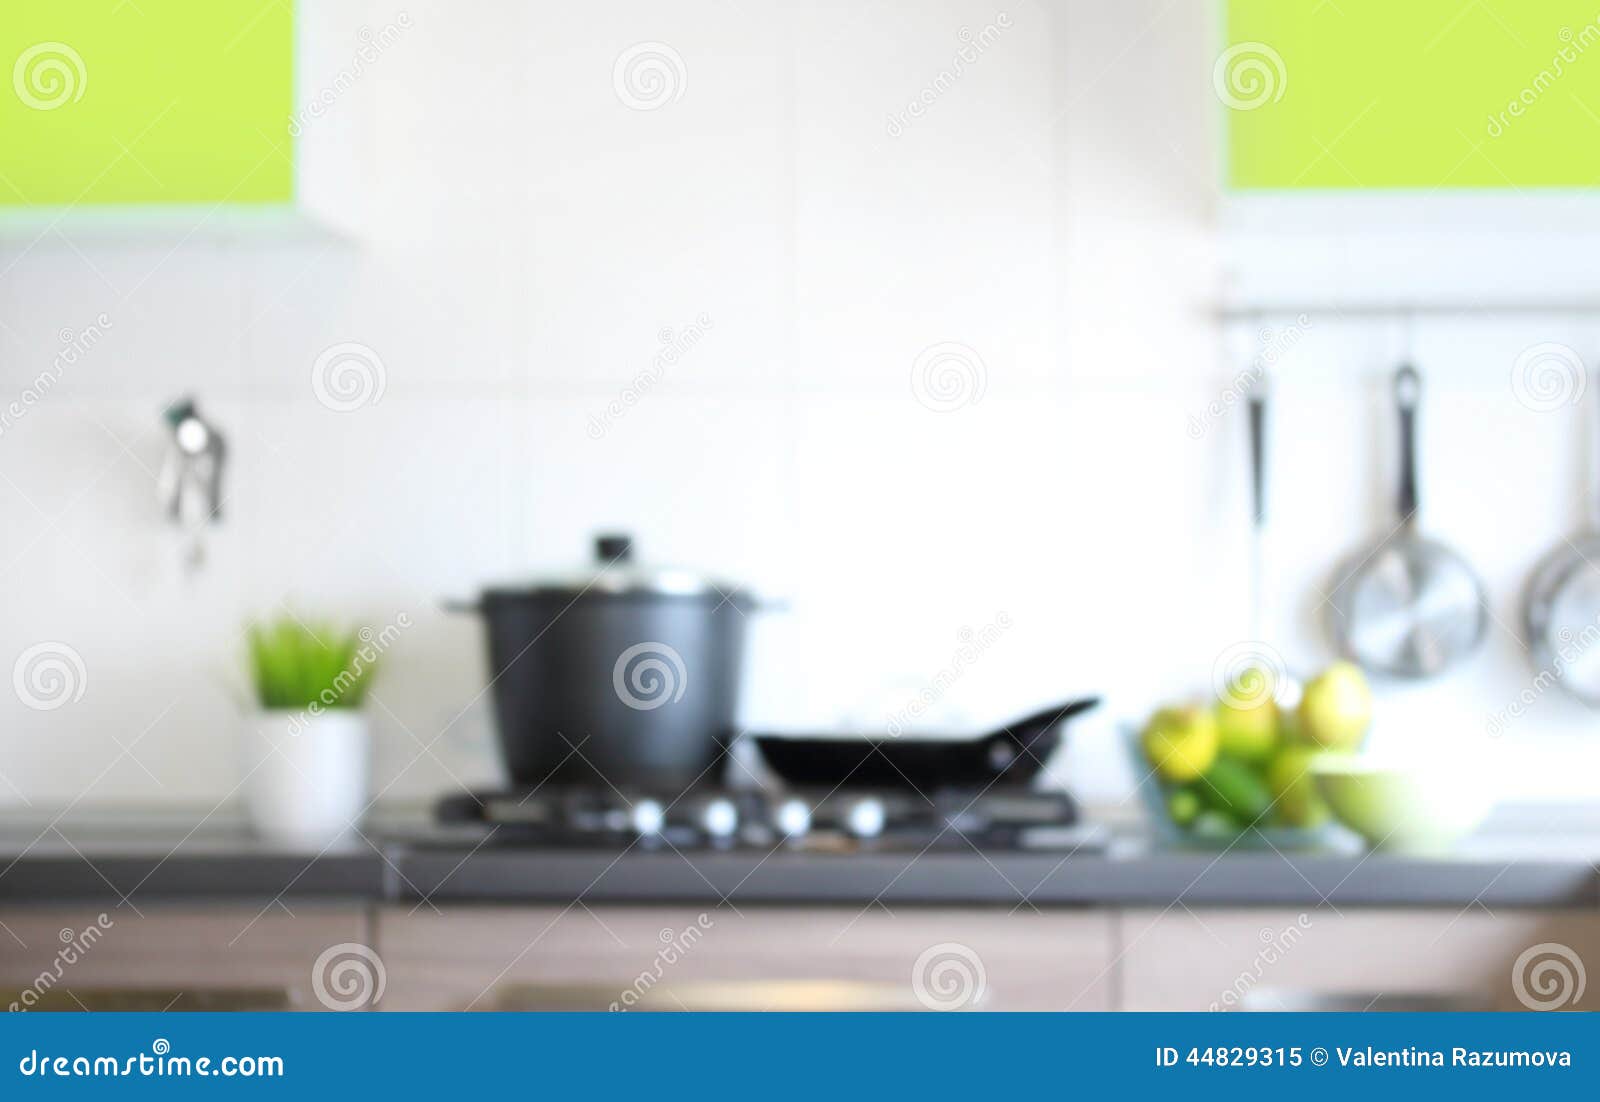 Blurred kitchen interior. stock image. Image of background - 44829315